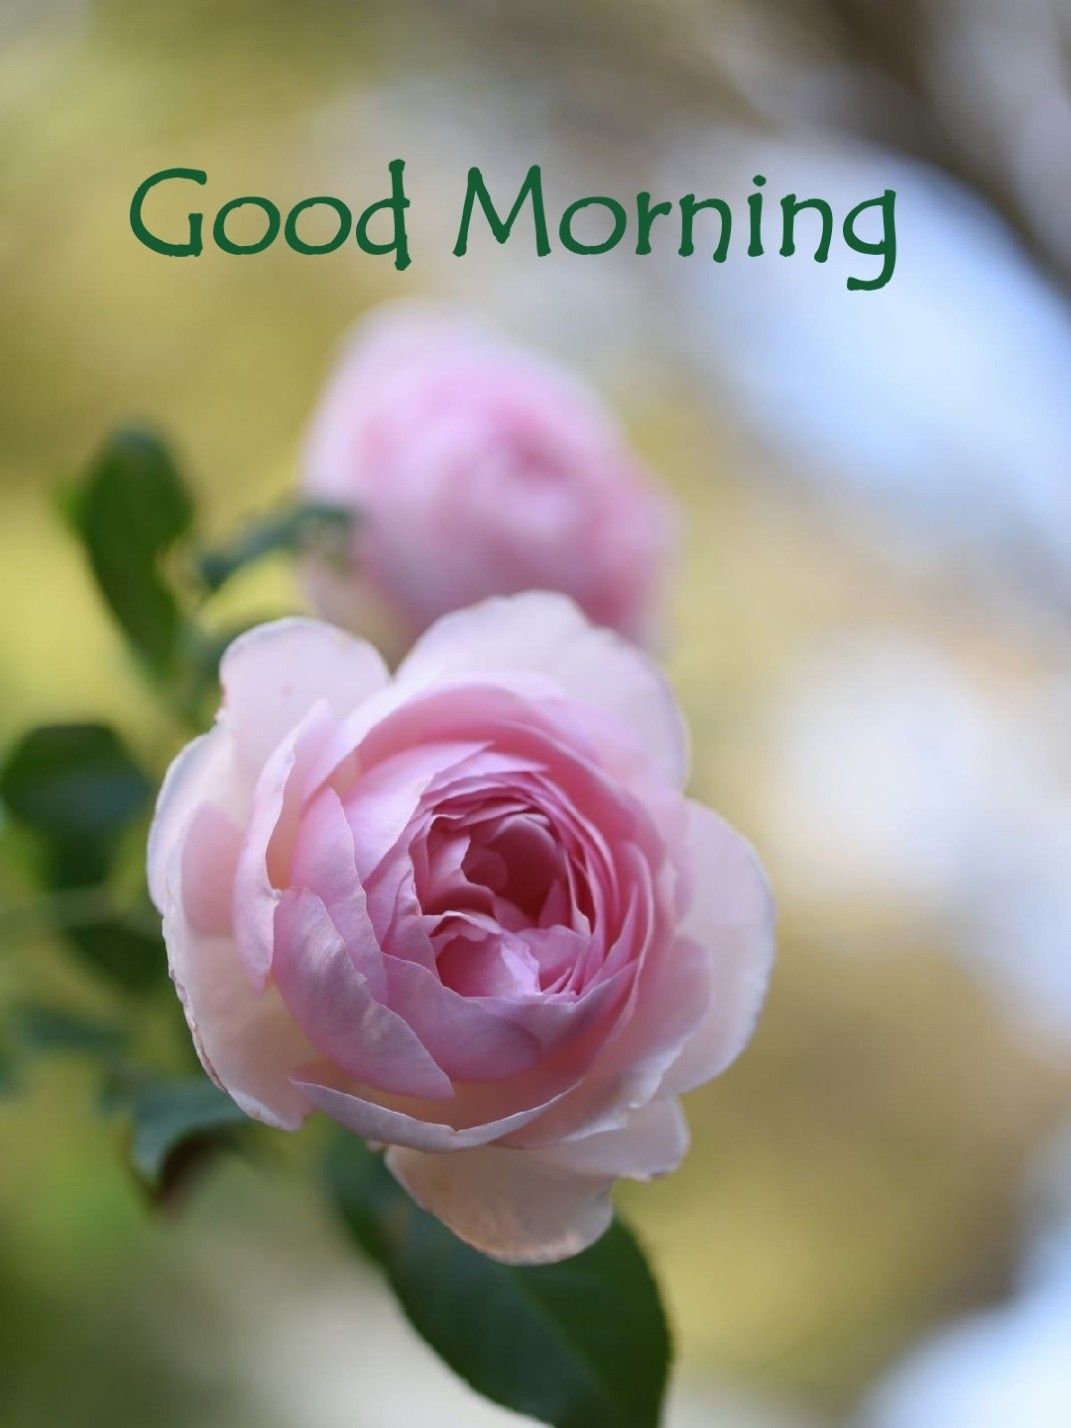 Good Morning Flowers ideas. good morning flowers, good morning, good morning greetings